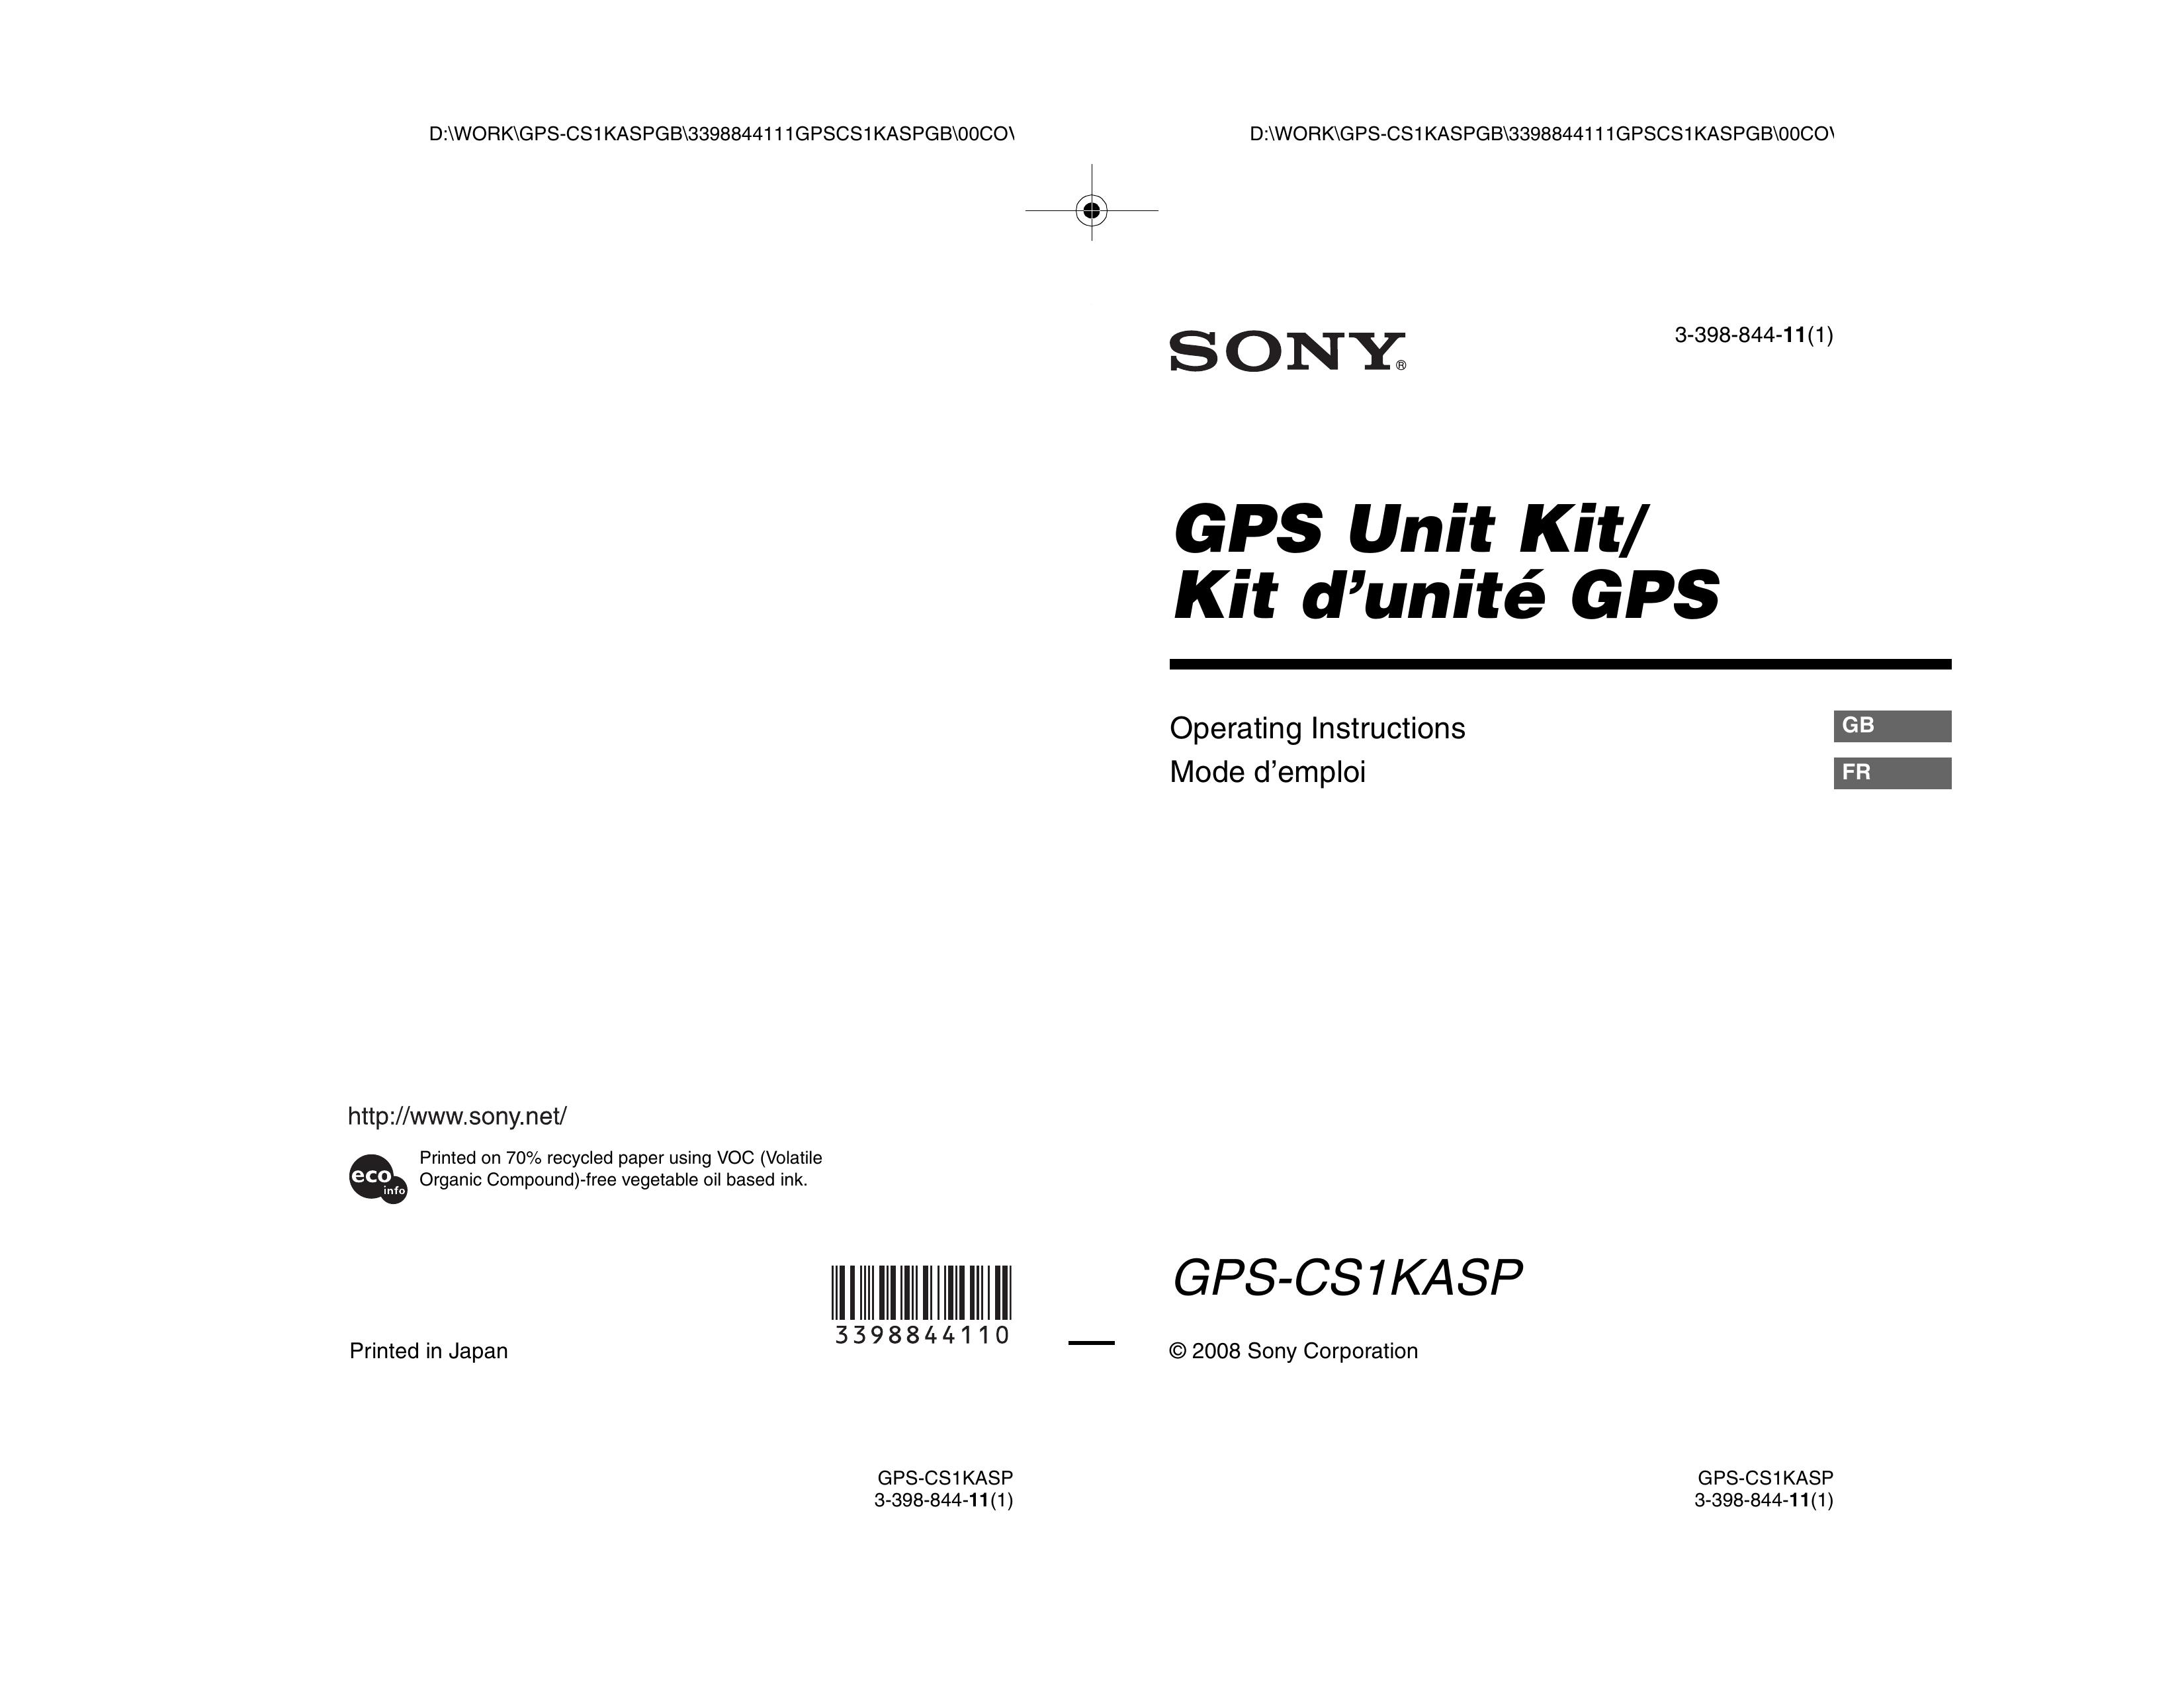 Sony GPS-CS1KASP Camera Accessories User Manual